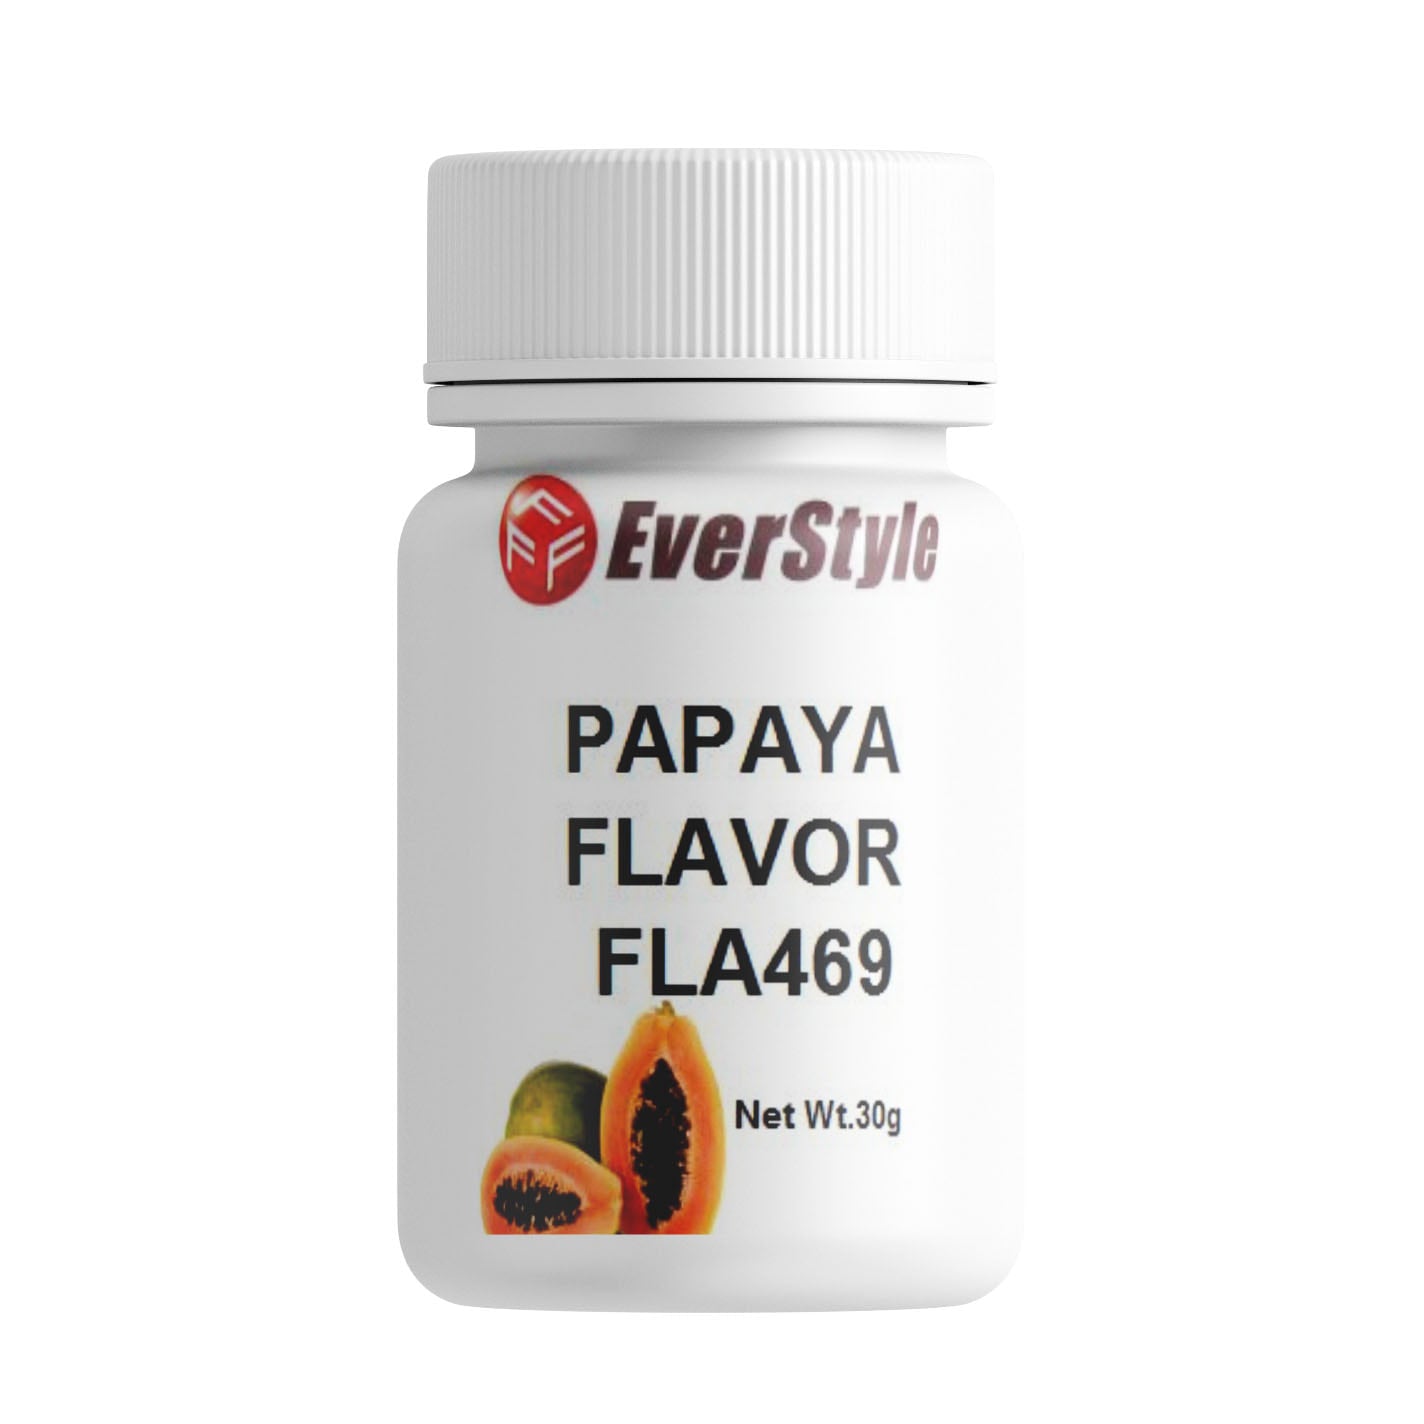 Everstyle Papaya Flavor 30g (FLA469)